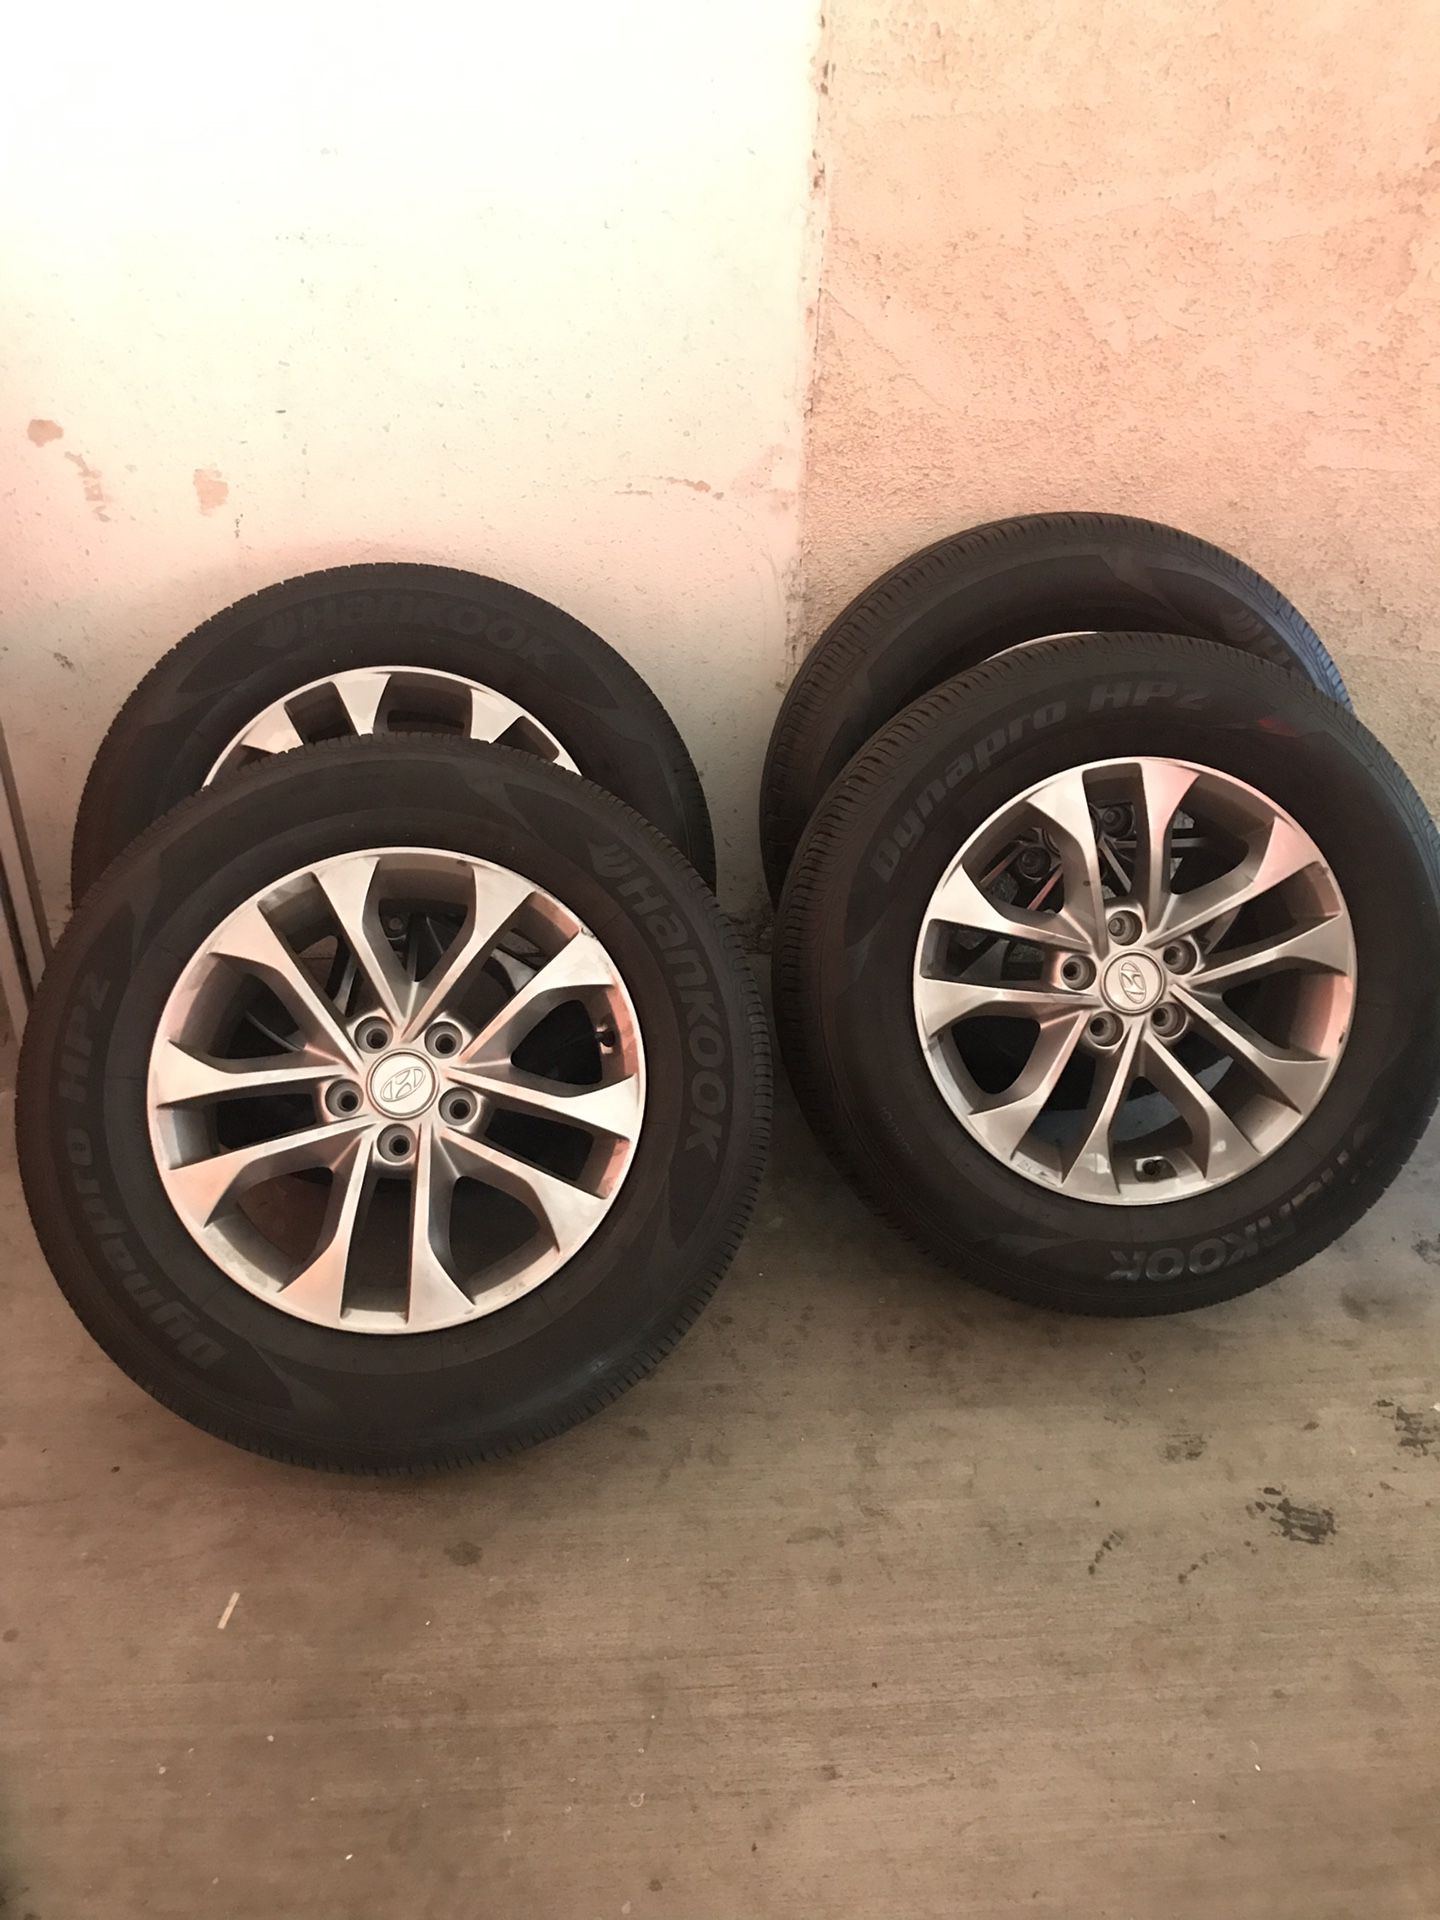 2019 Hyundai Santa Fe Rims and Tires 235/65R17